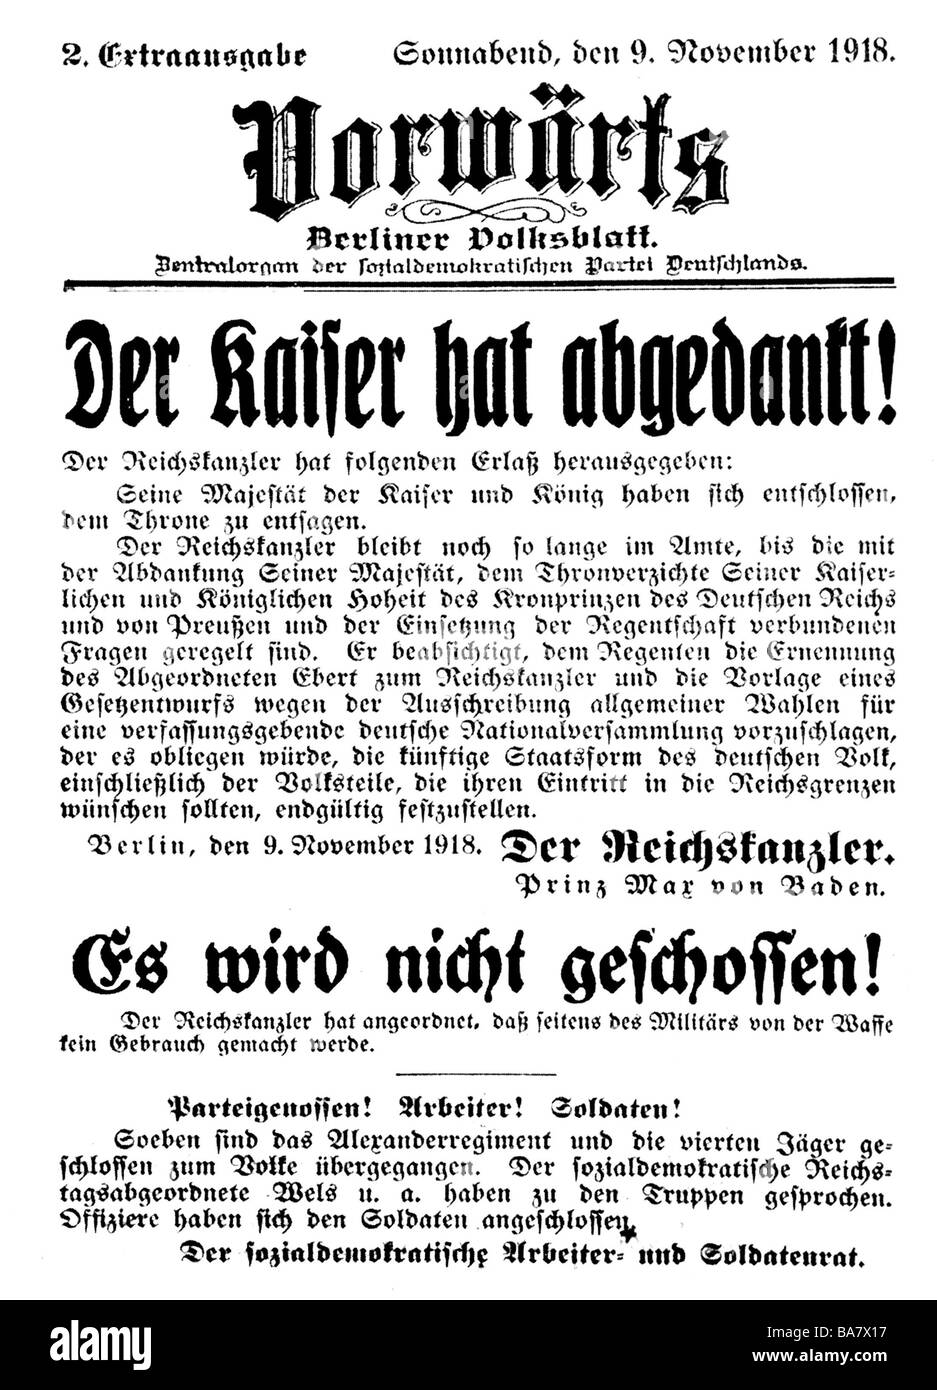 events, First World War / WW I, end of War, abdication of the German Emperor William II, headline: 'Der Kaiser hat abgedankt' (The Emperor has abdicated), newspaper 'Vorwärts', Berlin, 9.11.1918, Stock Photo